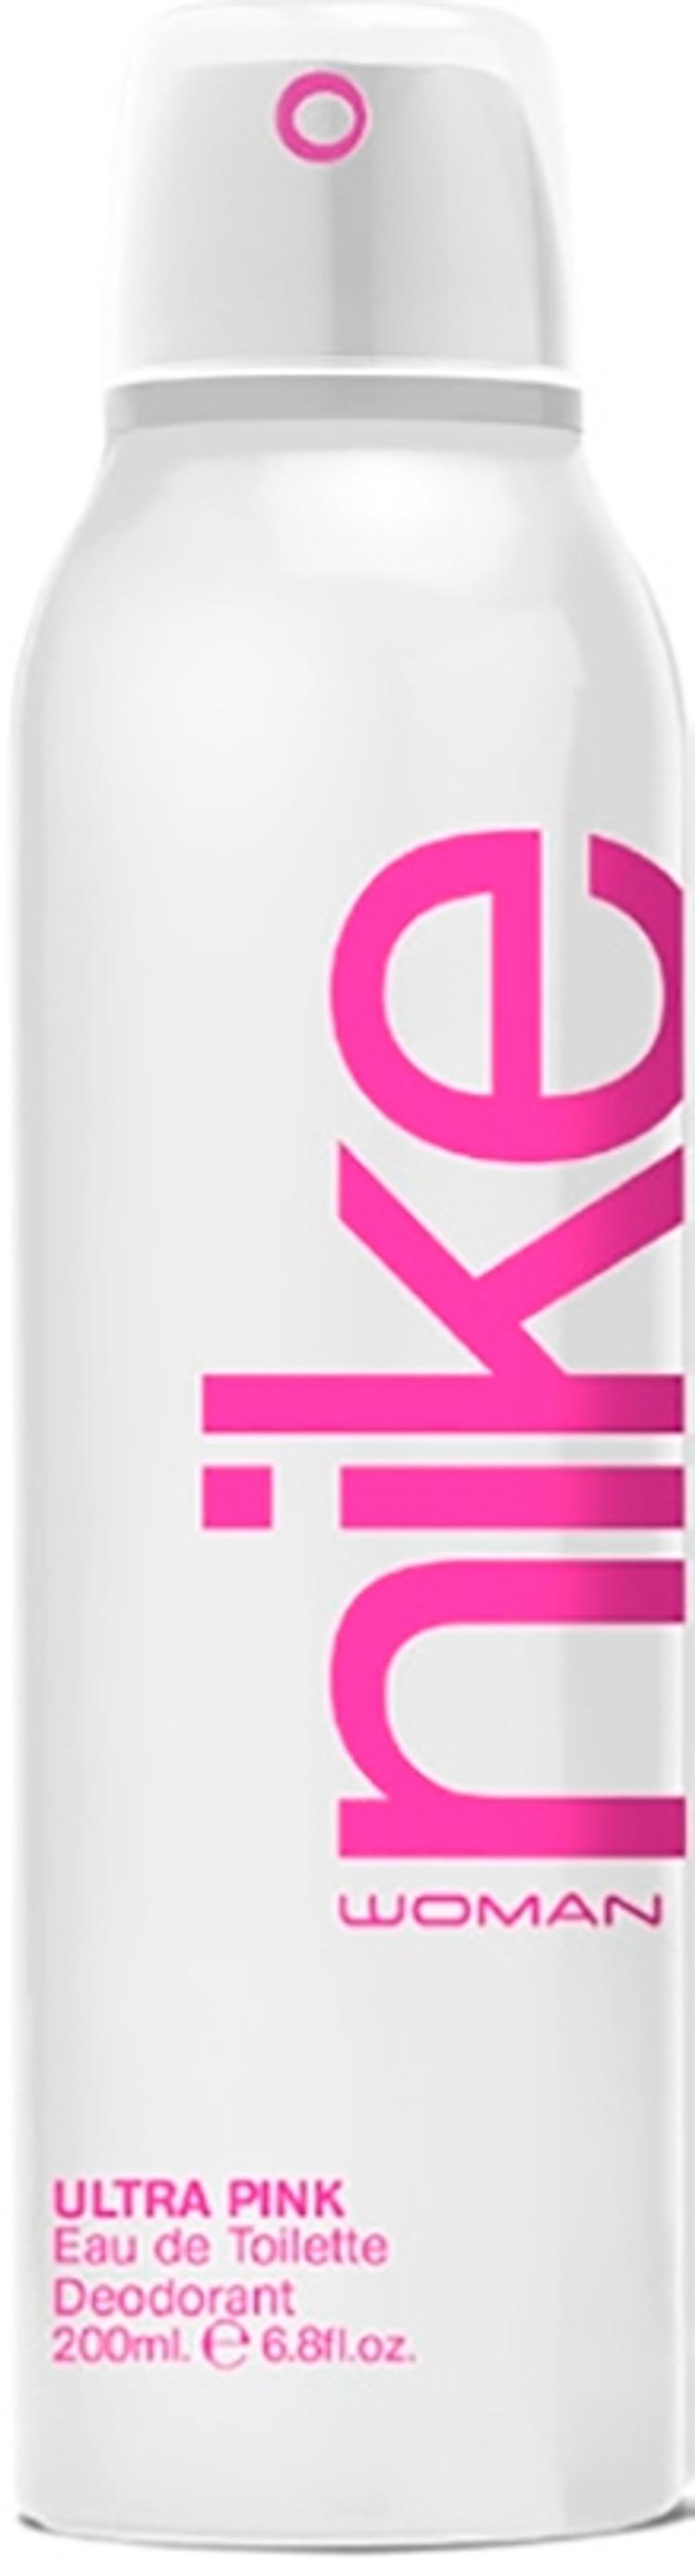 Nike Ultra Pink Woman EdT suihkedeodorantti 200ml